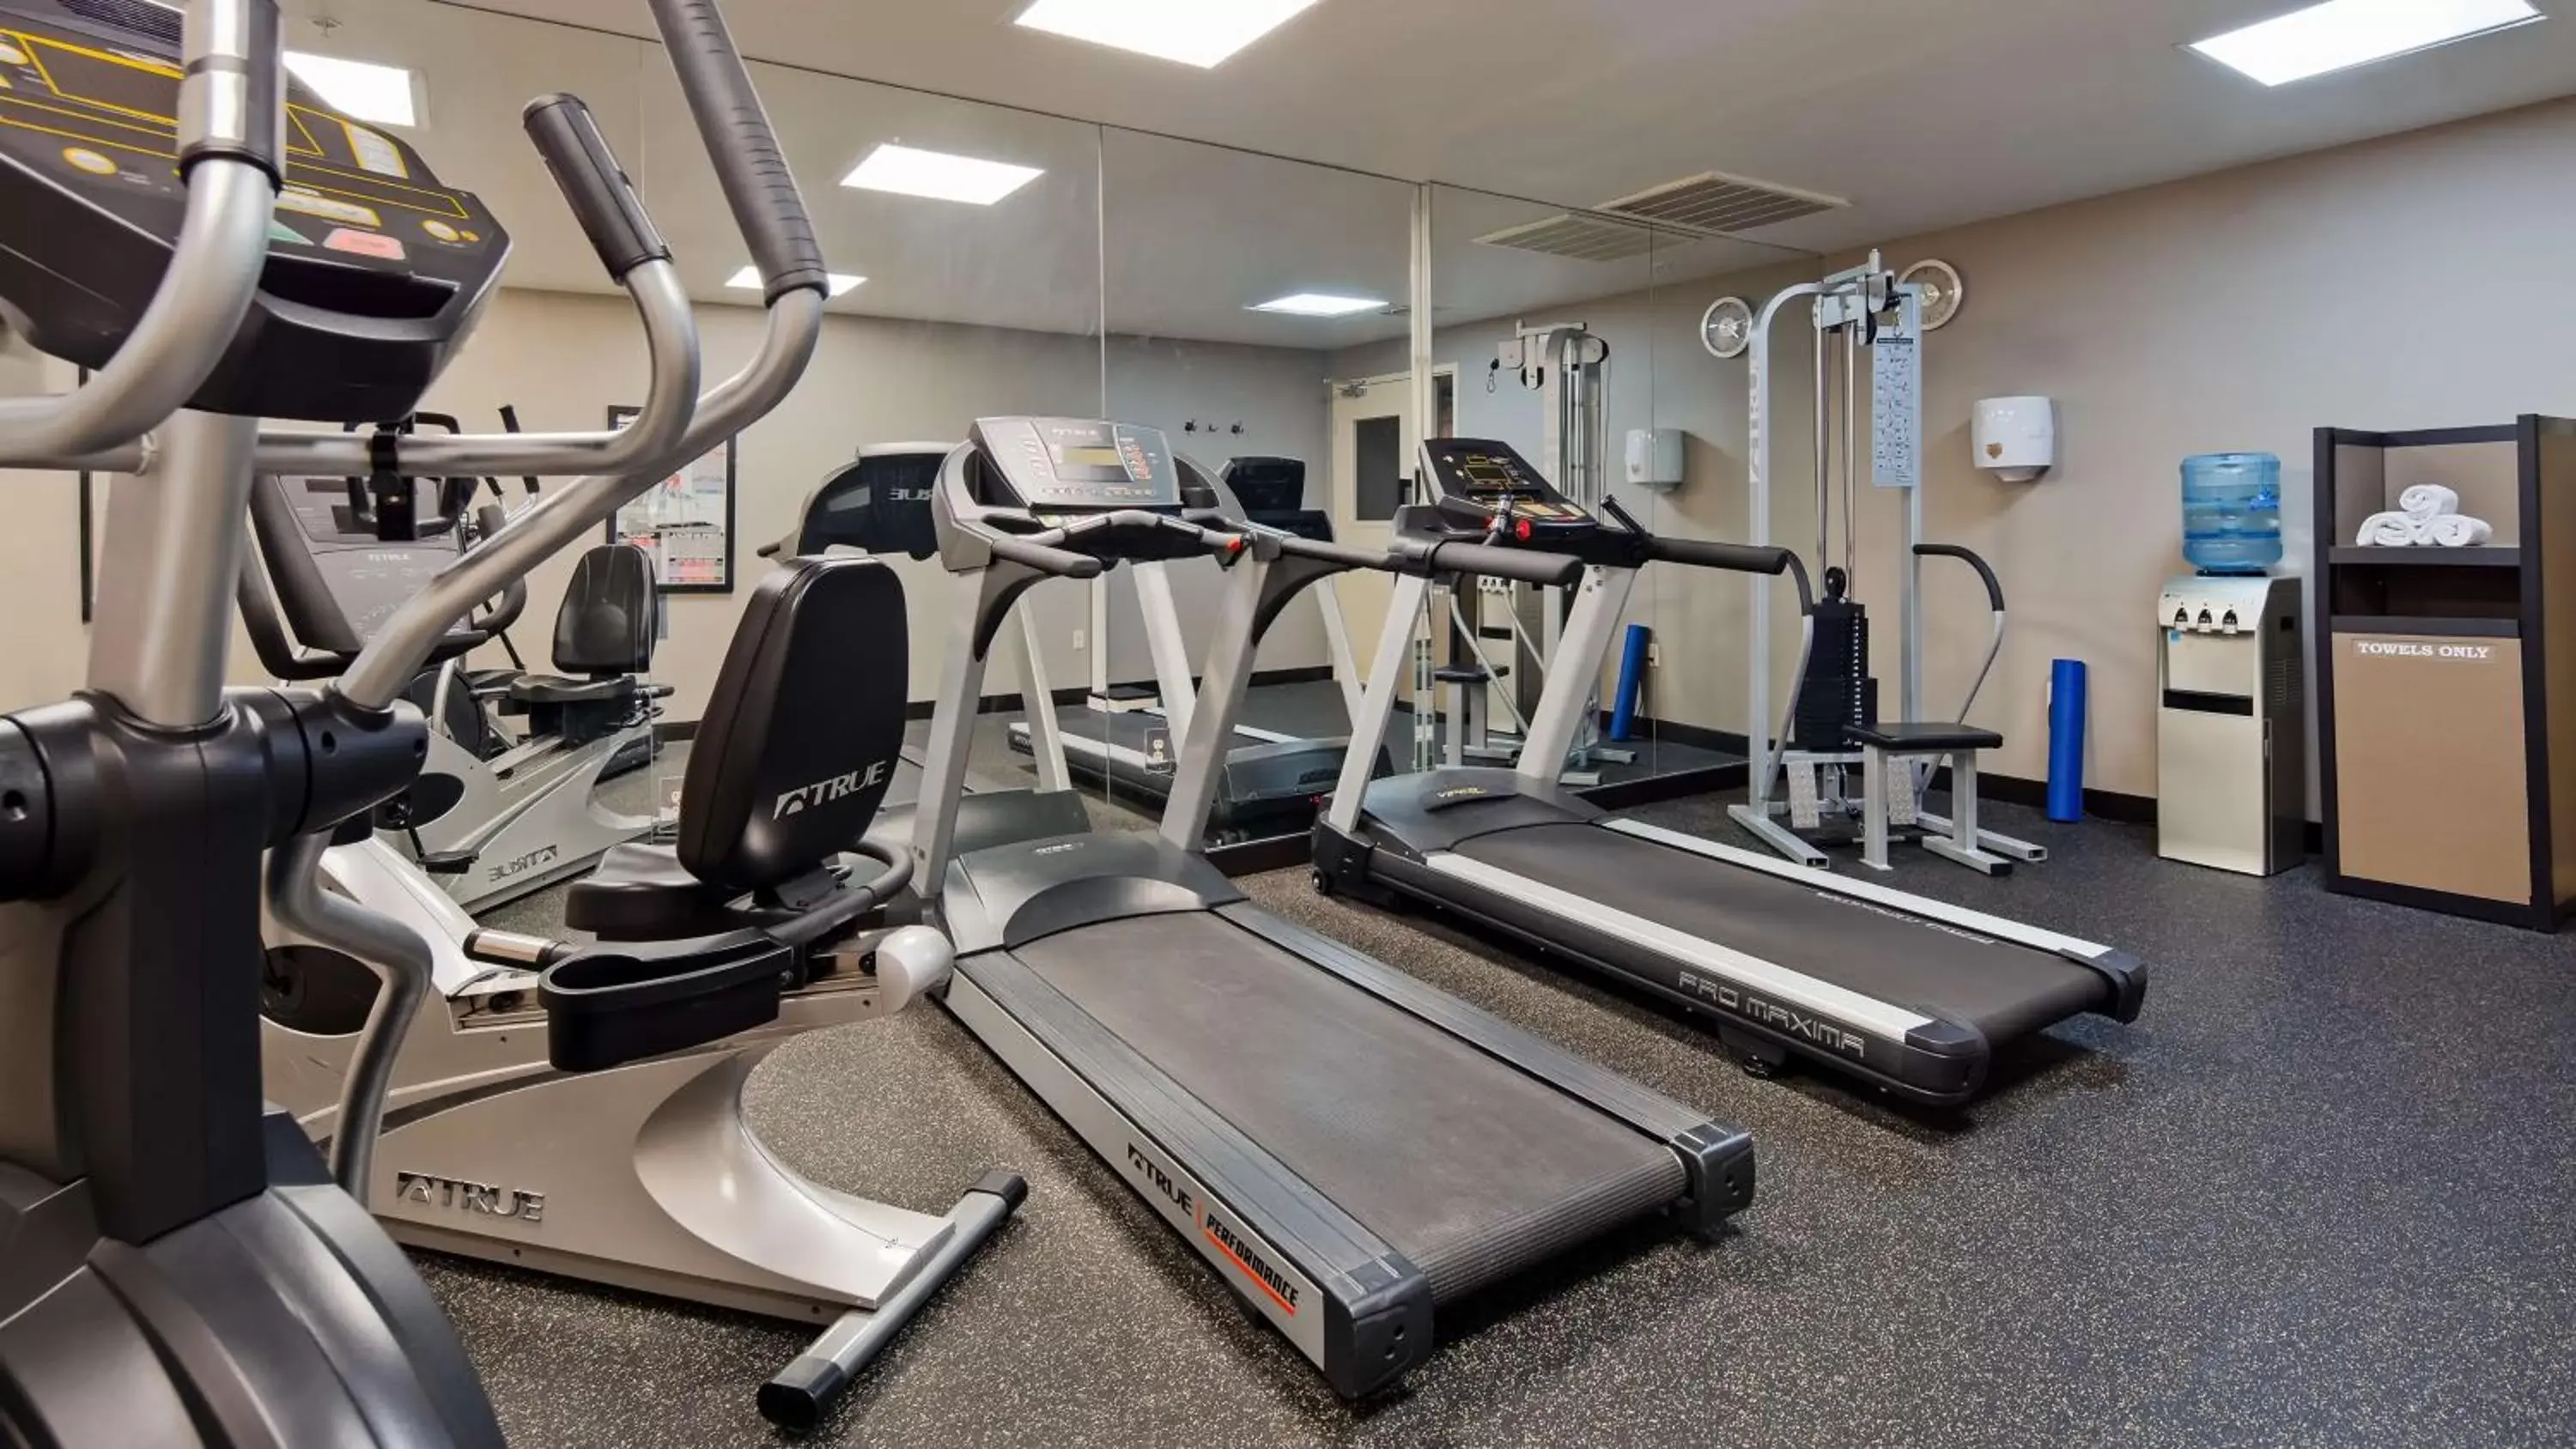 Fitness centre/facilities, Fitness Center/Facilities in Best Western Plus North Las Vegas Inn & Suites